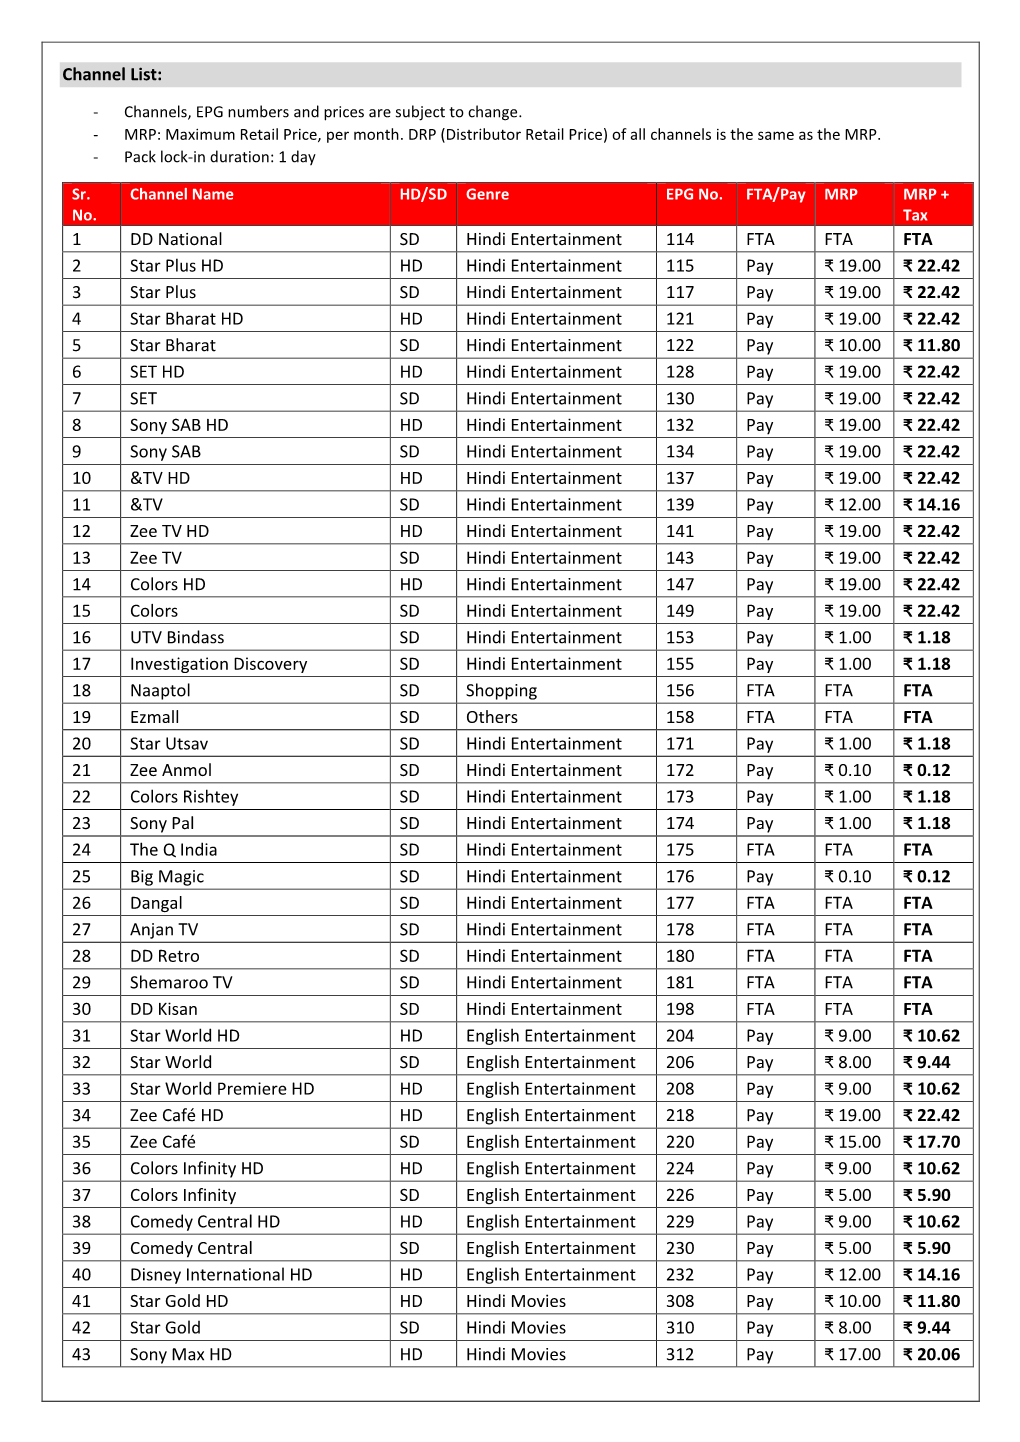 Channel List: 1 DD National SD Hindi Entertainment 114 FTA